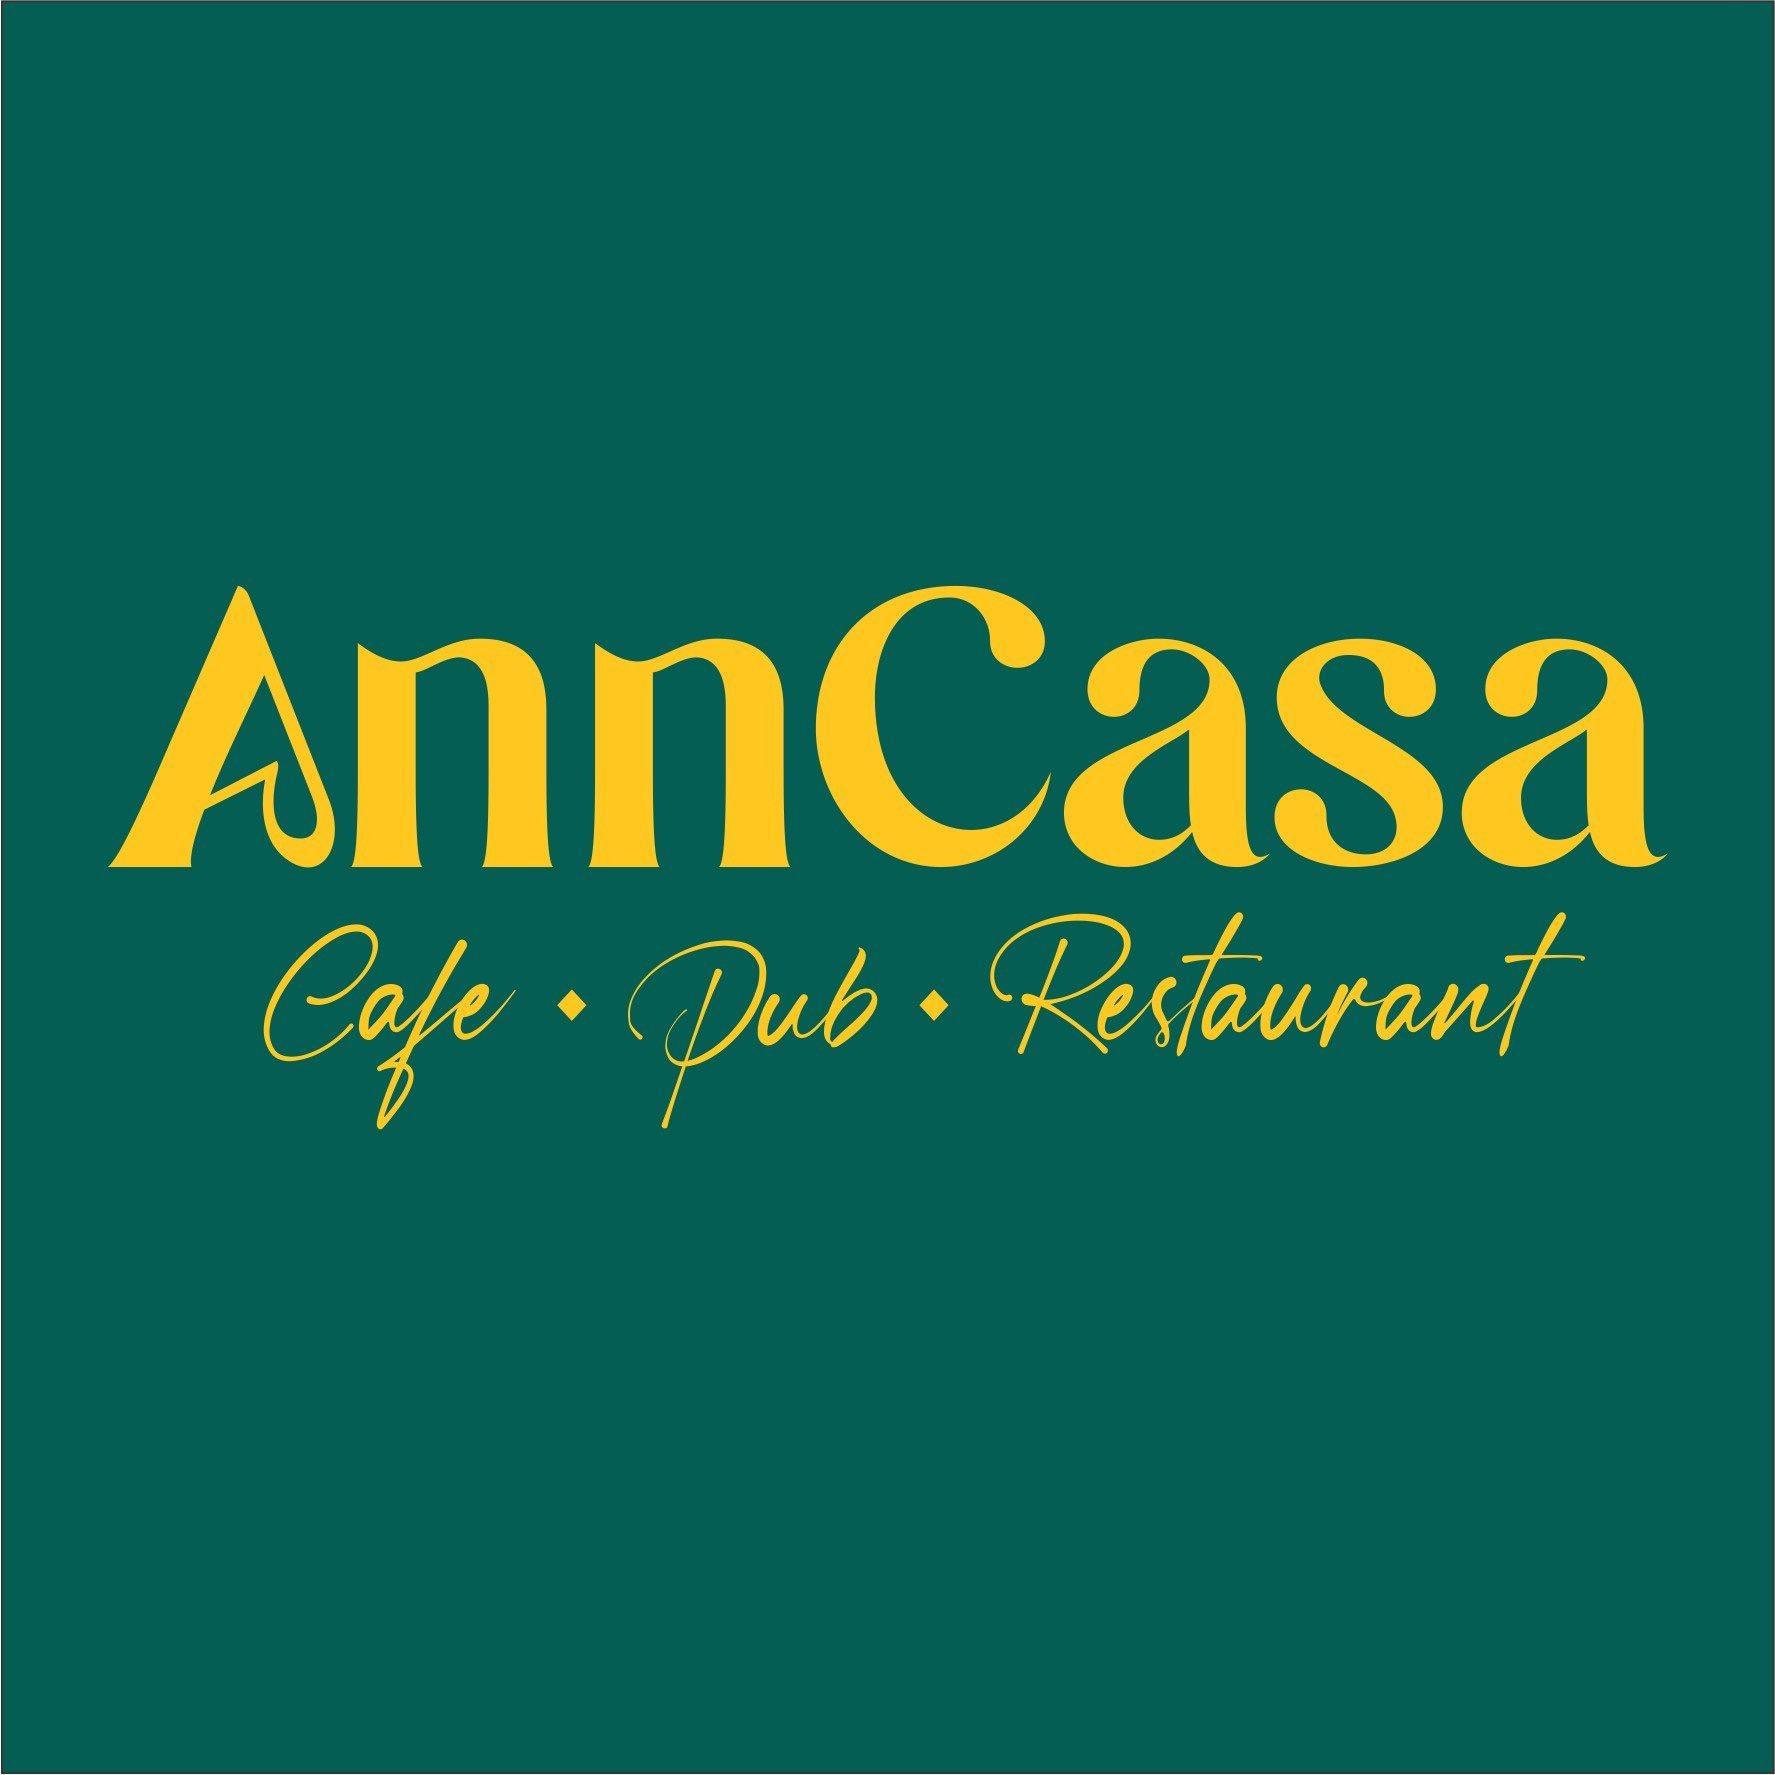 AnnCasa Cafe - Pub - Restaurant